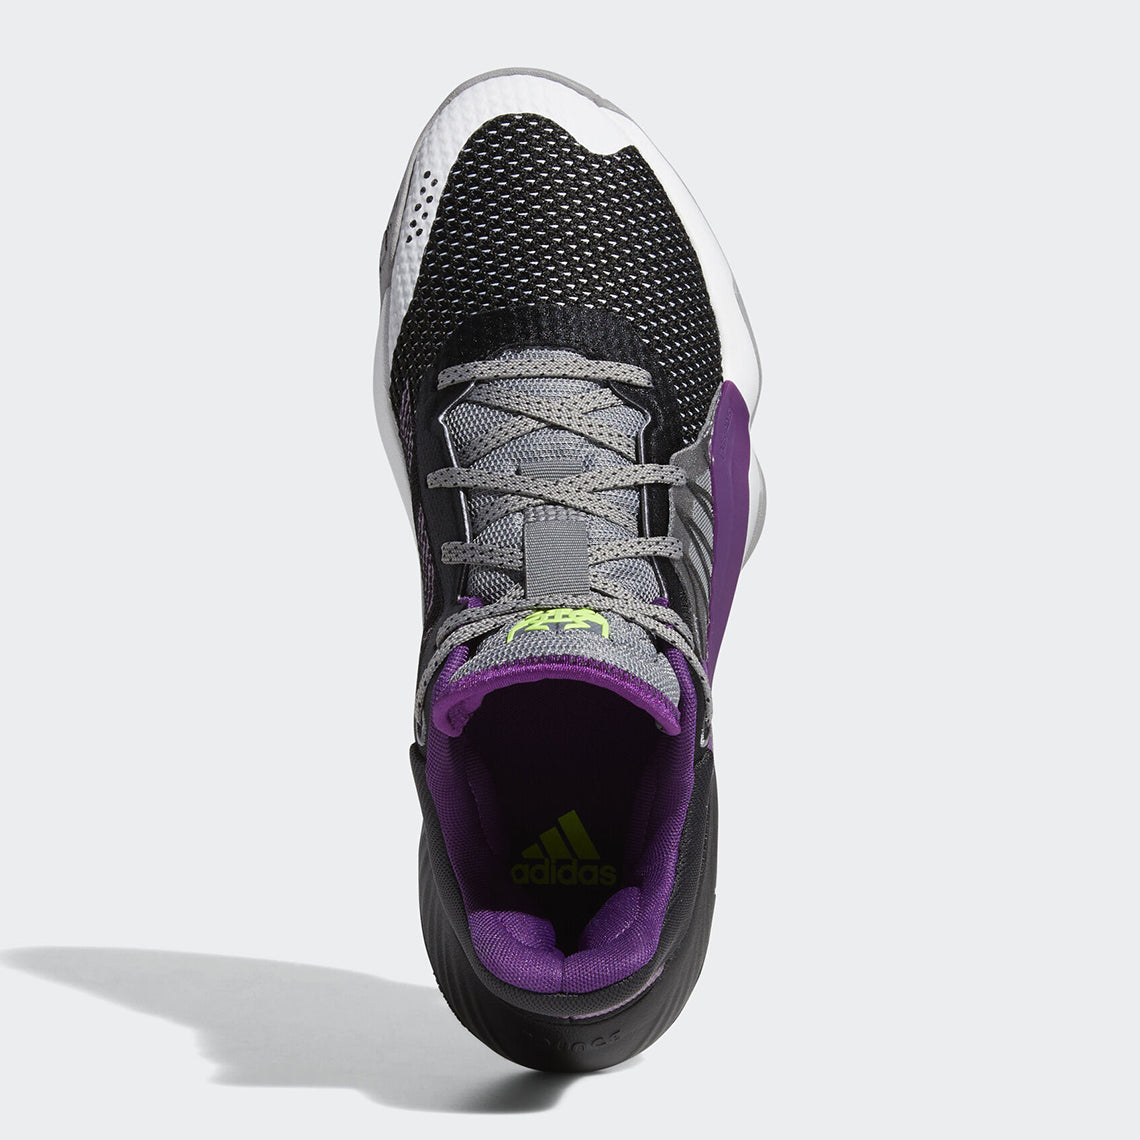 Adidas DON 1 Joker Zapatos EH2134 - Gris UK 13 - Trade Sports